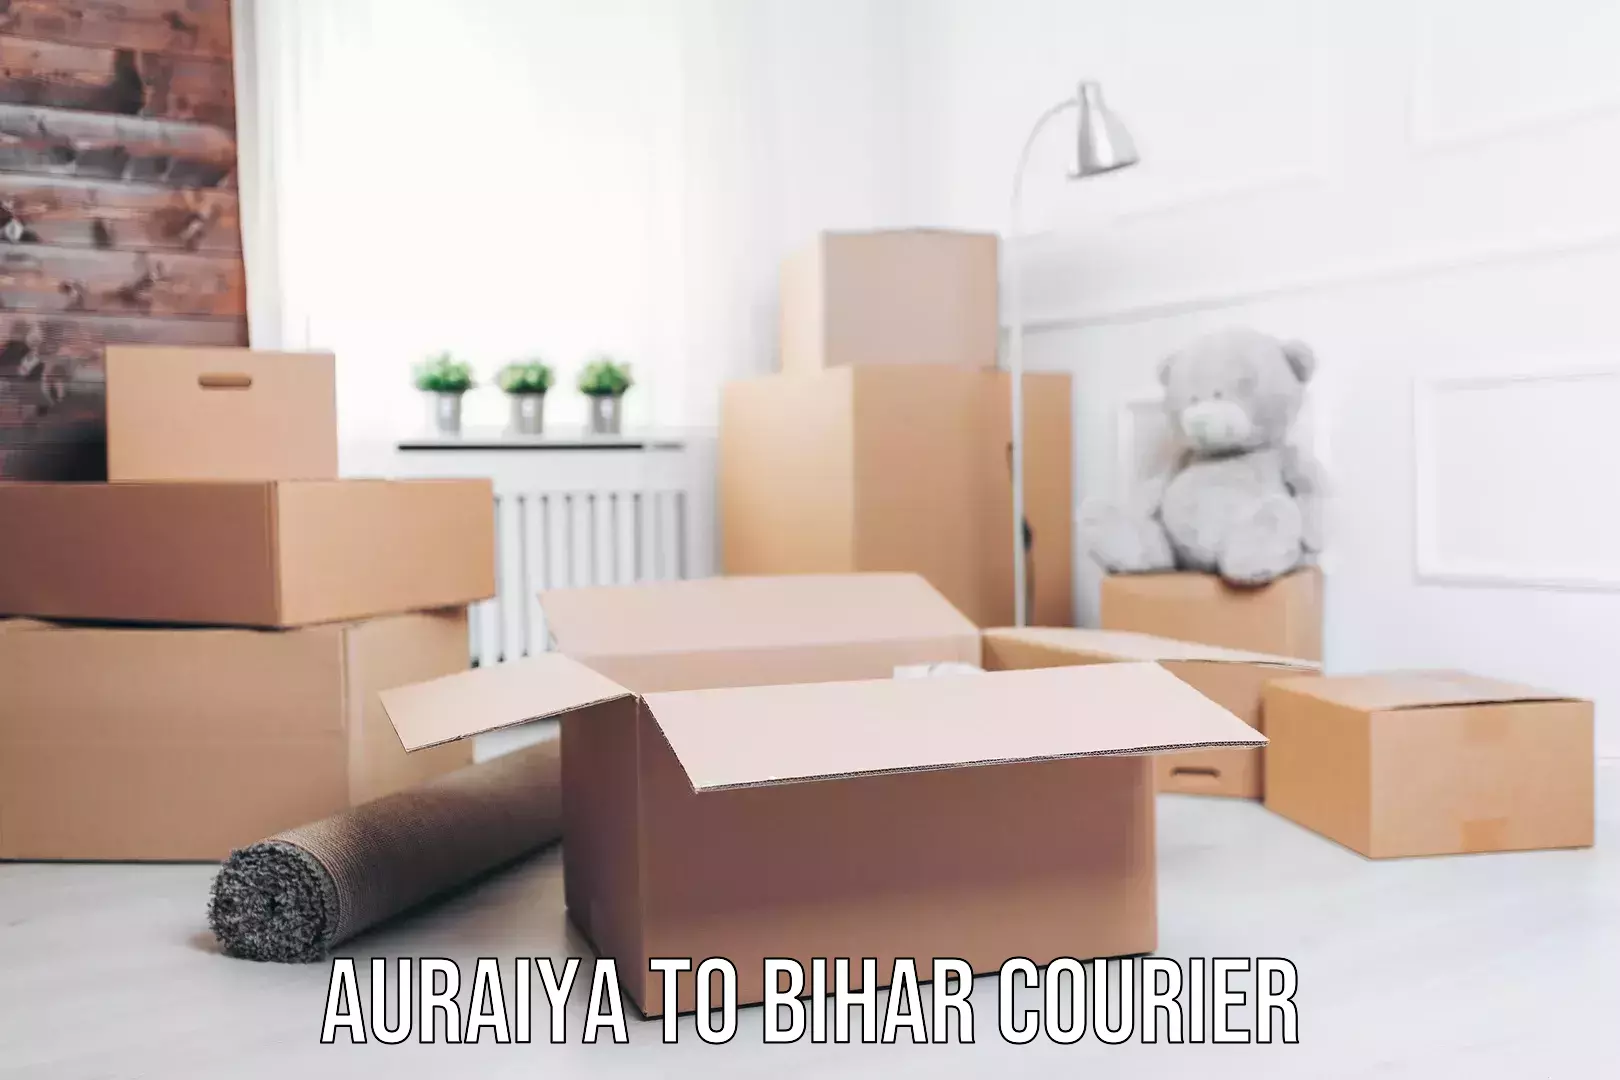 24-hour delivery options Auraiya to Aurangabad Bihar